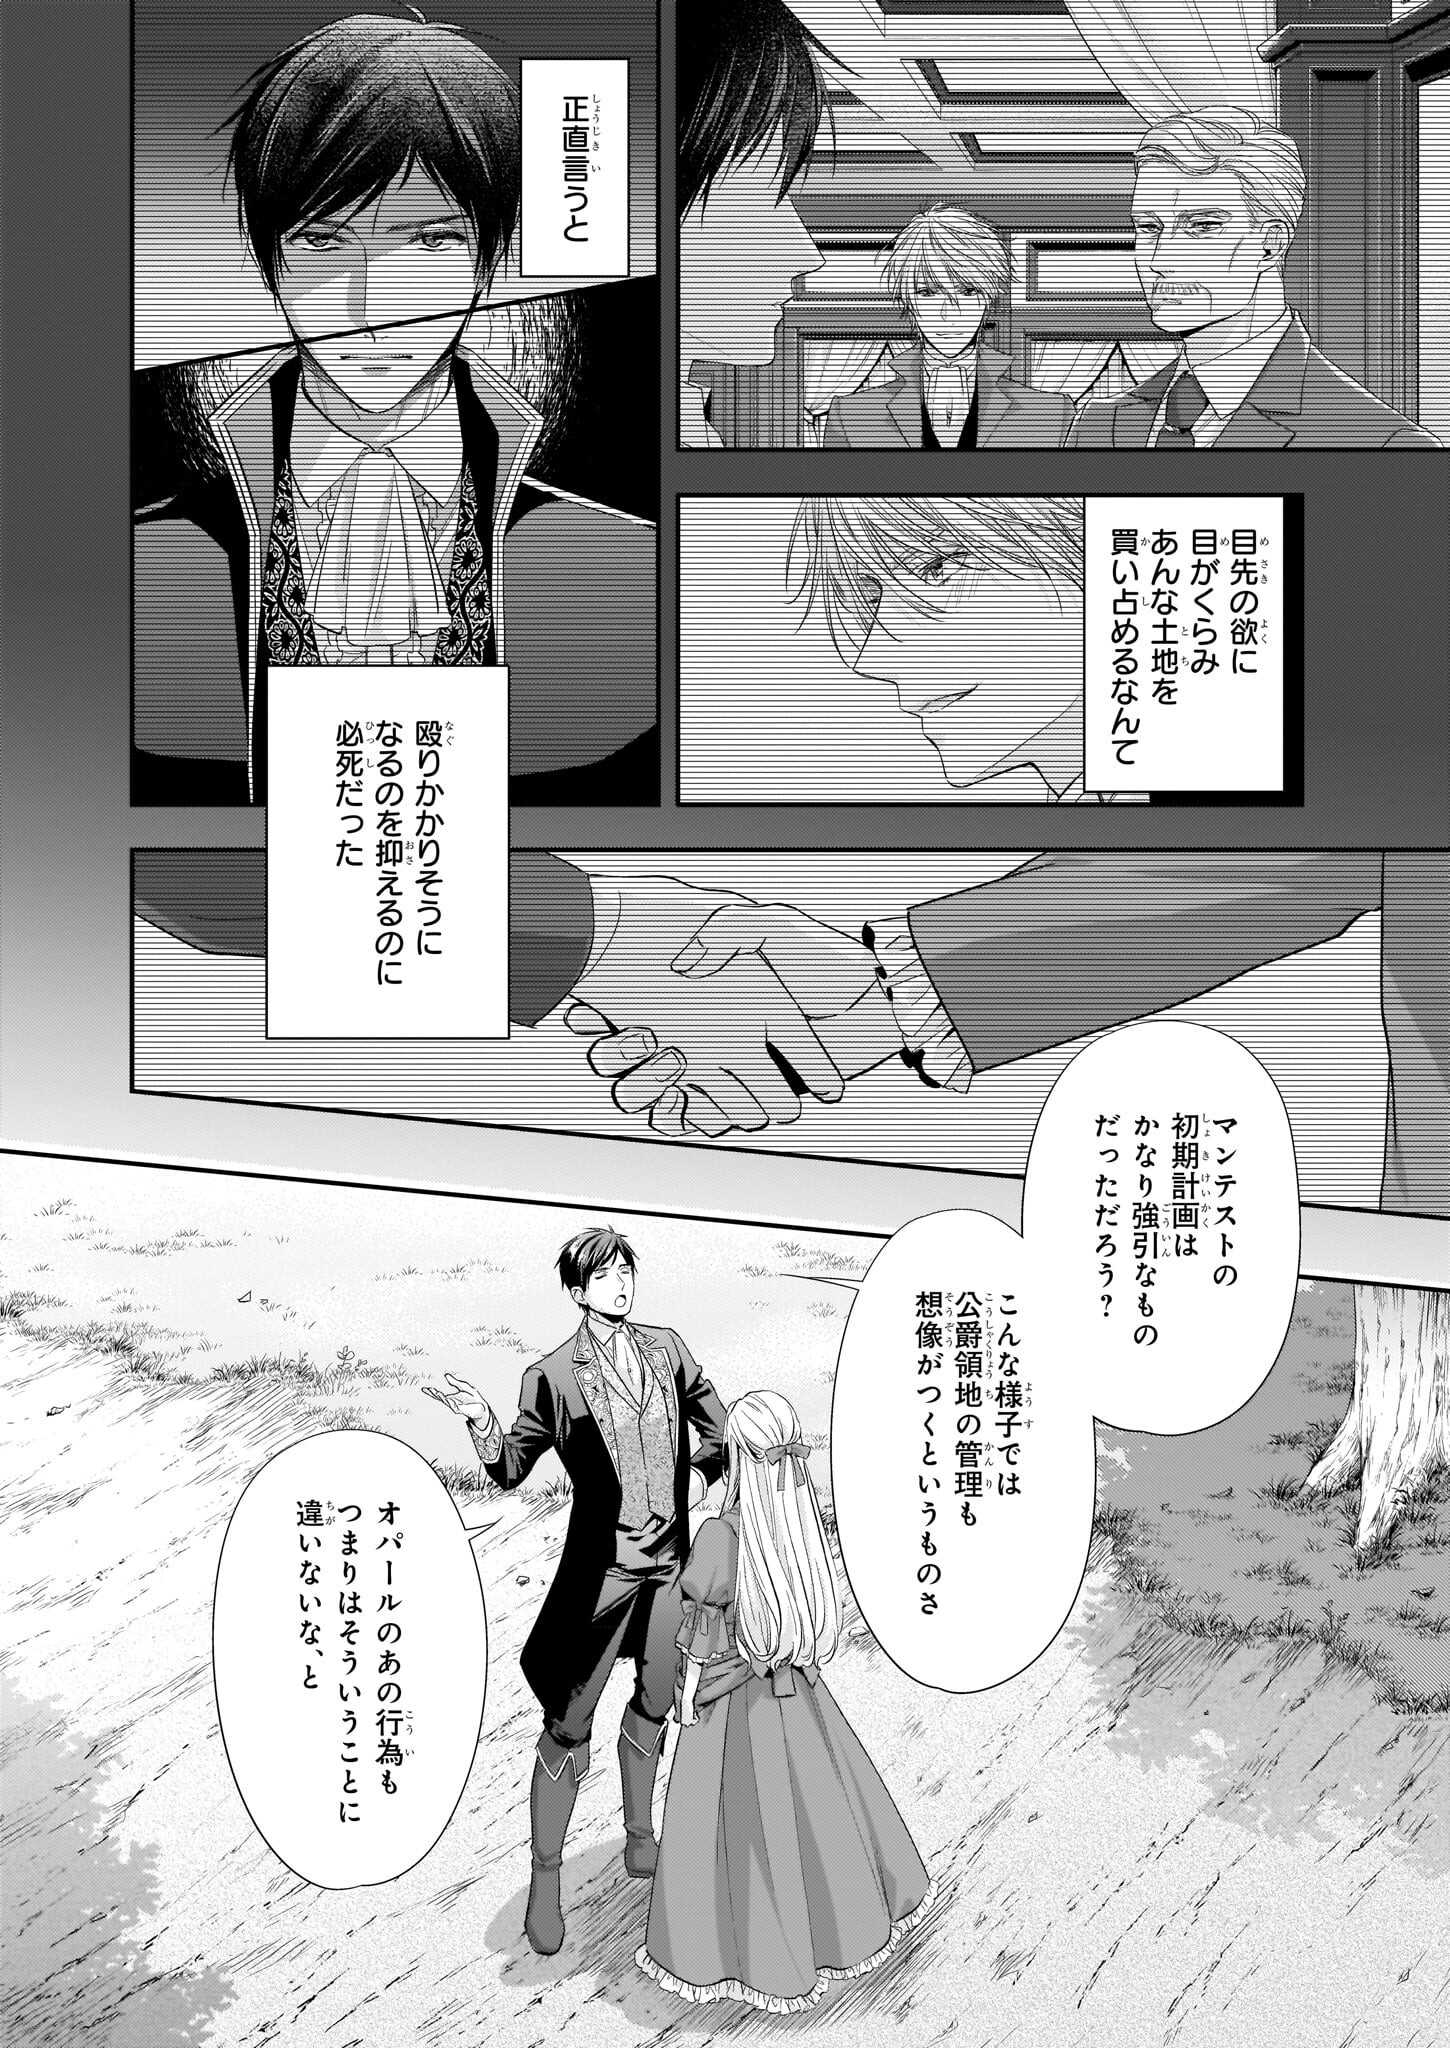 Yane Urabeya no Koushaku Fujin - Chapter 23.1 - Page 8